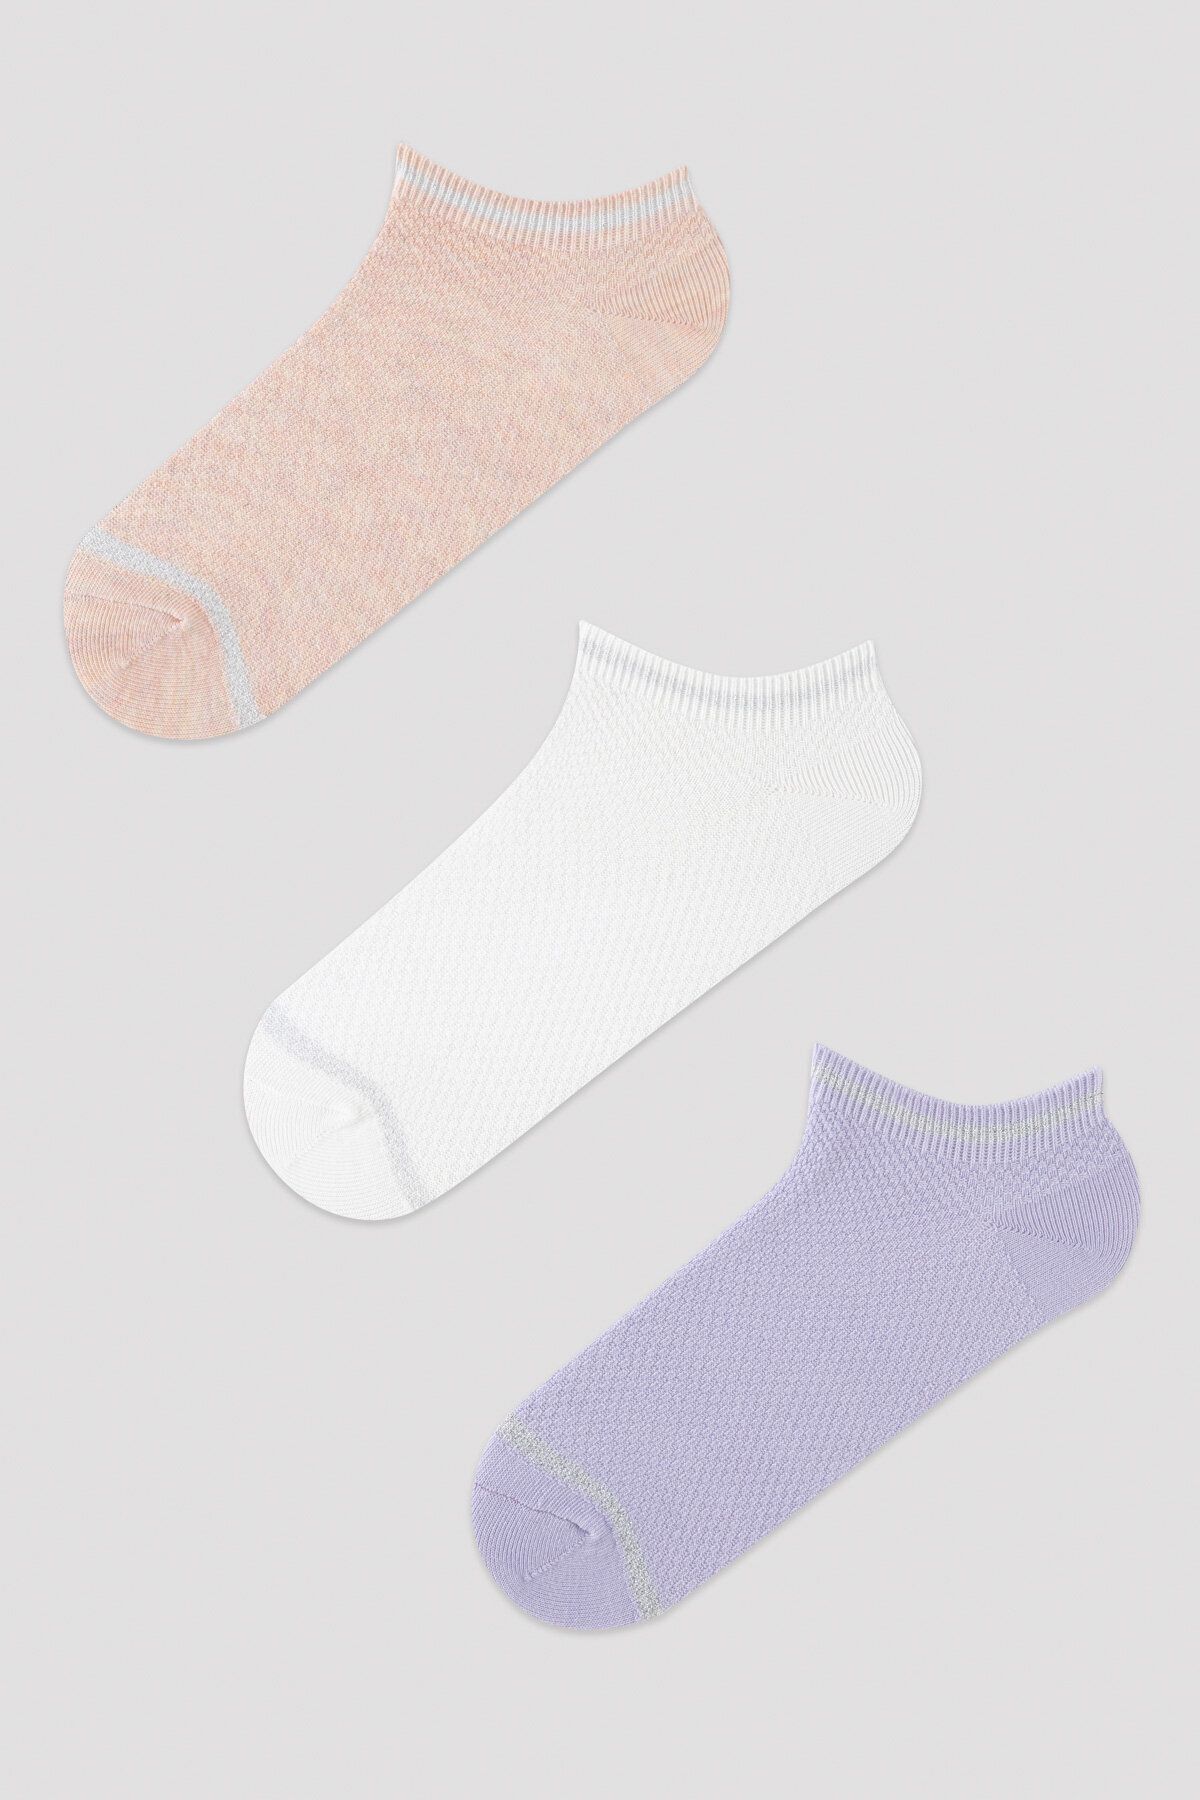 Penti Jakarlı Soft Renkli 3lü Patik Çorap